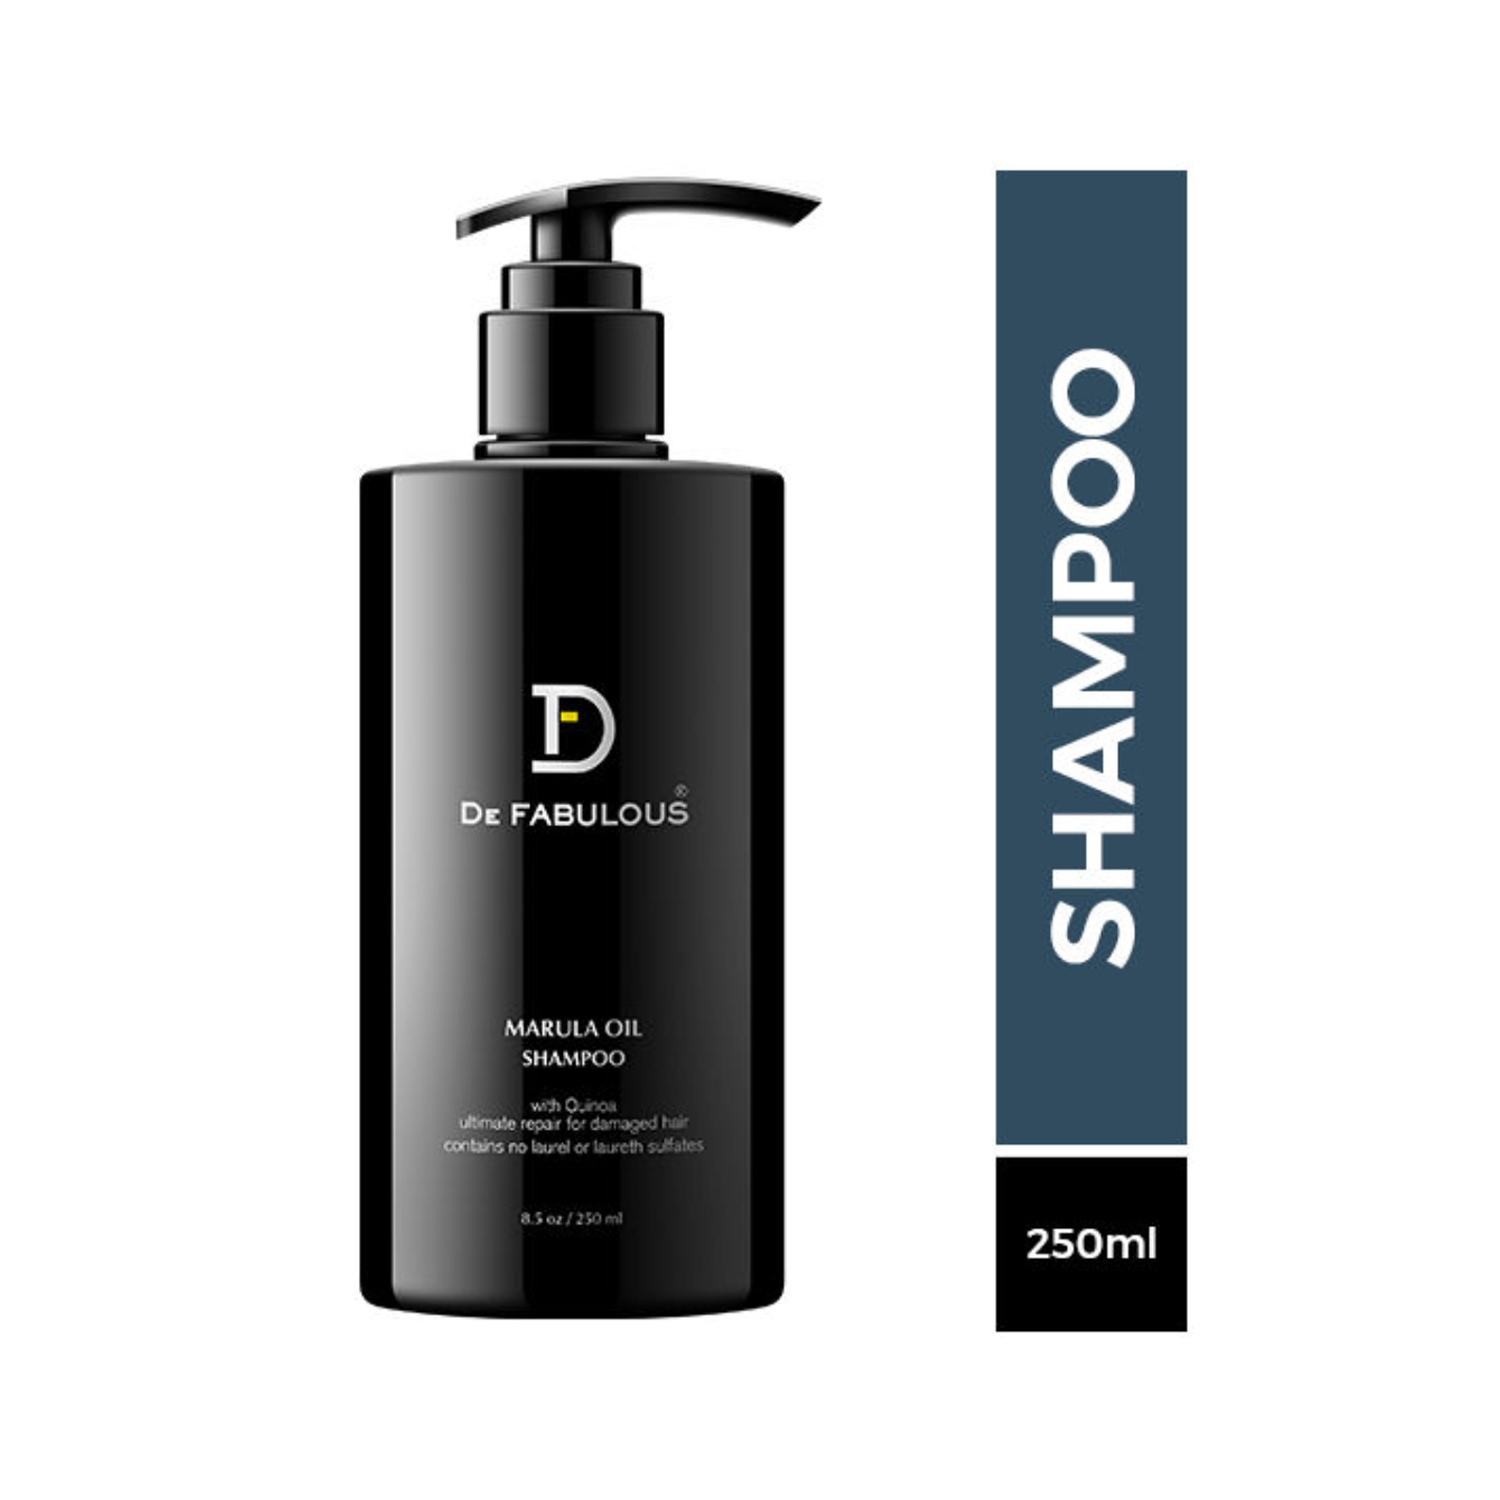 De Fabulous | De Fabulous Marula Oil Shampoo with Quinoa Ultimate Repair for Damaged Hair (250ml)